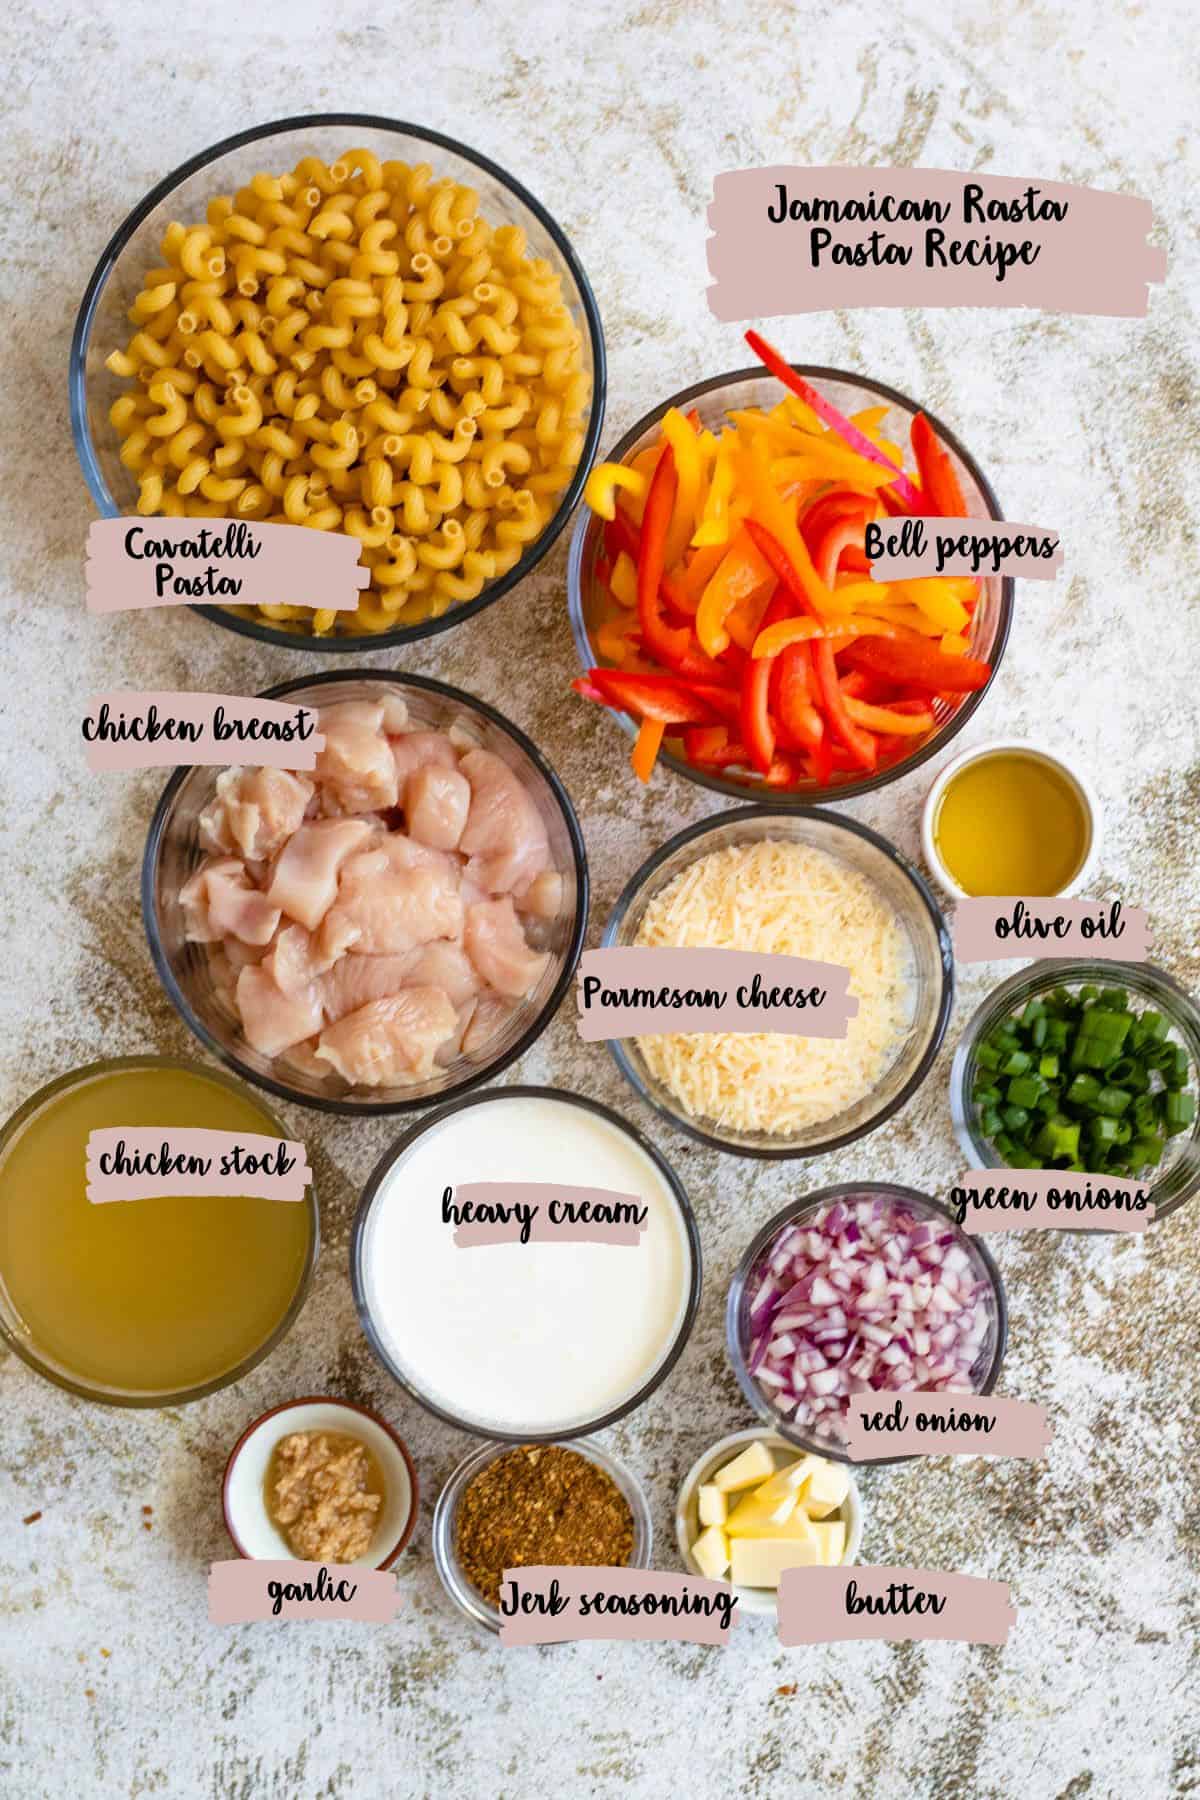 Ingredients shown that are used to make Jamaican rasta pasta recipe.